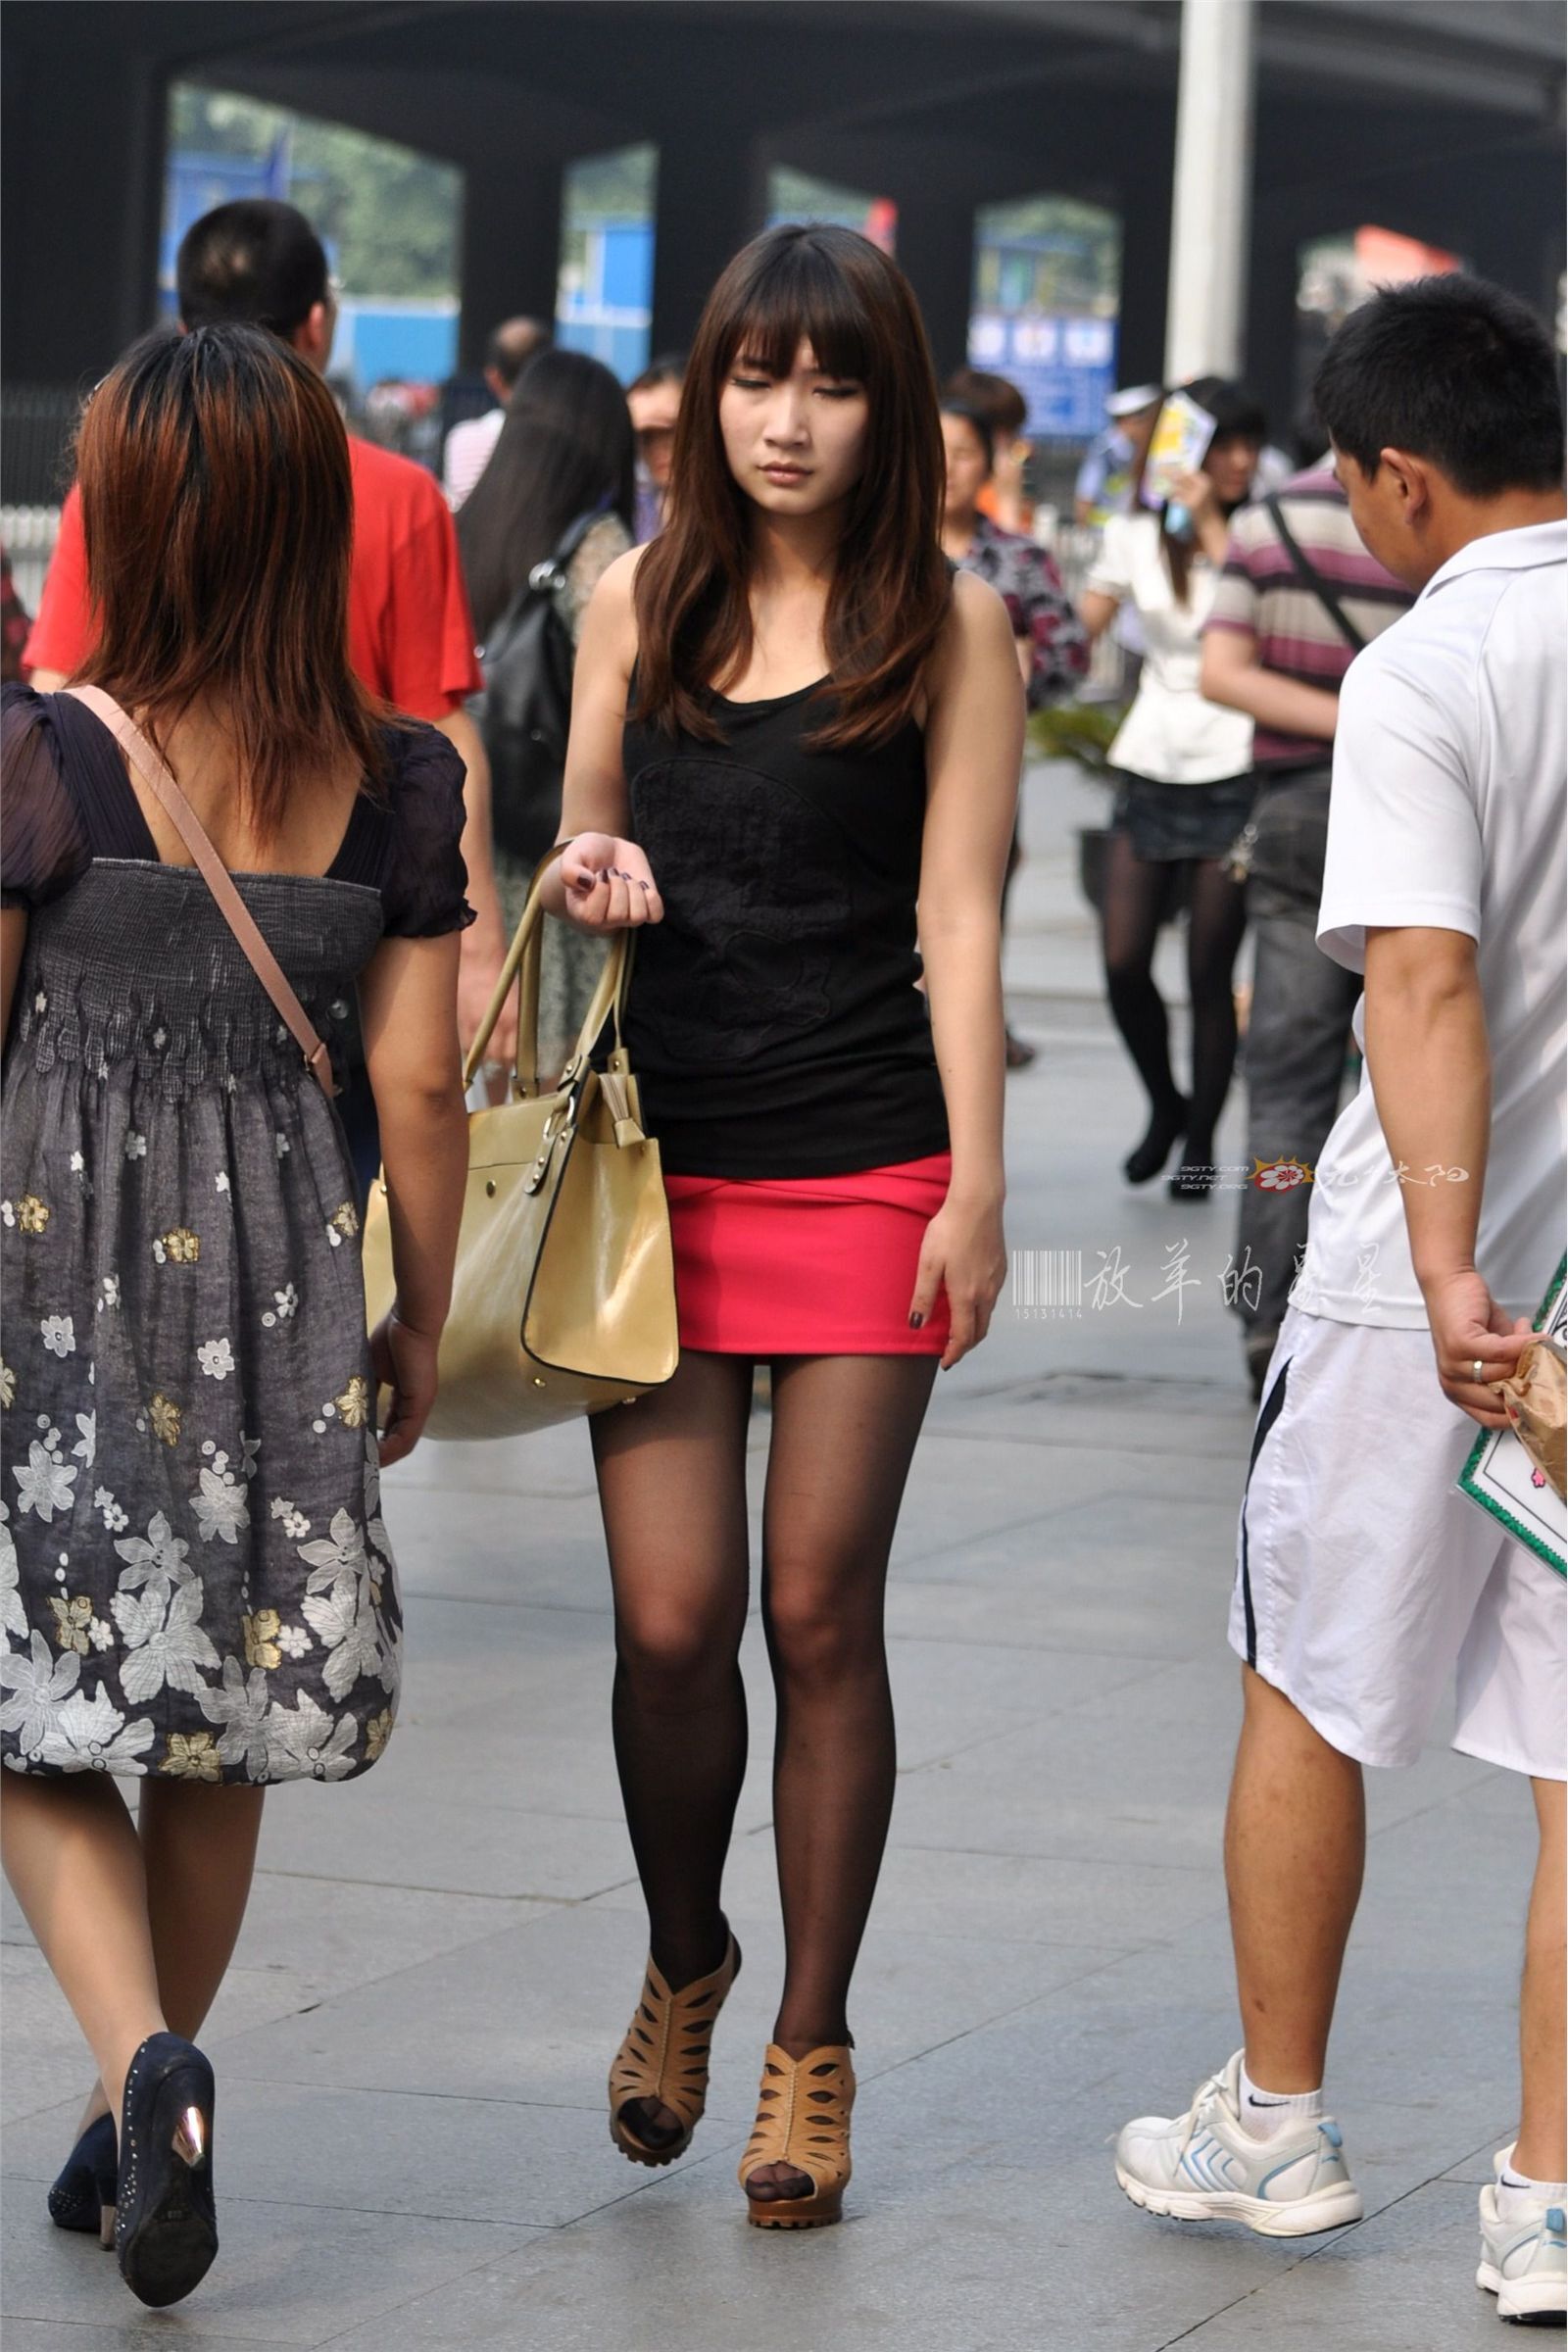 MM的红裙黑丝美腿看起来相当养眼